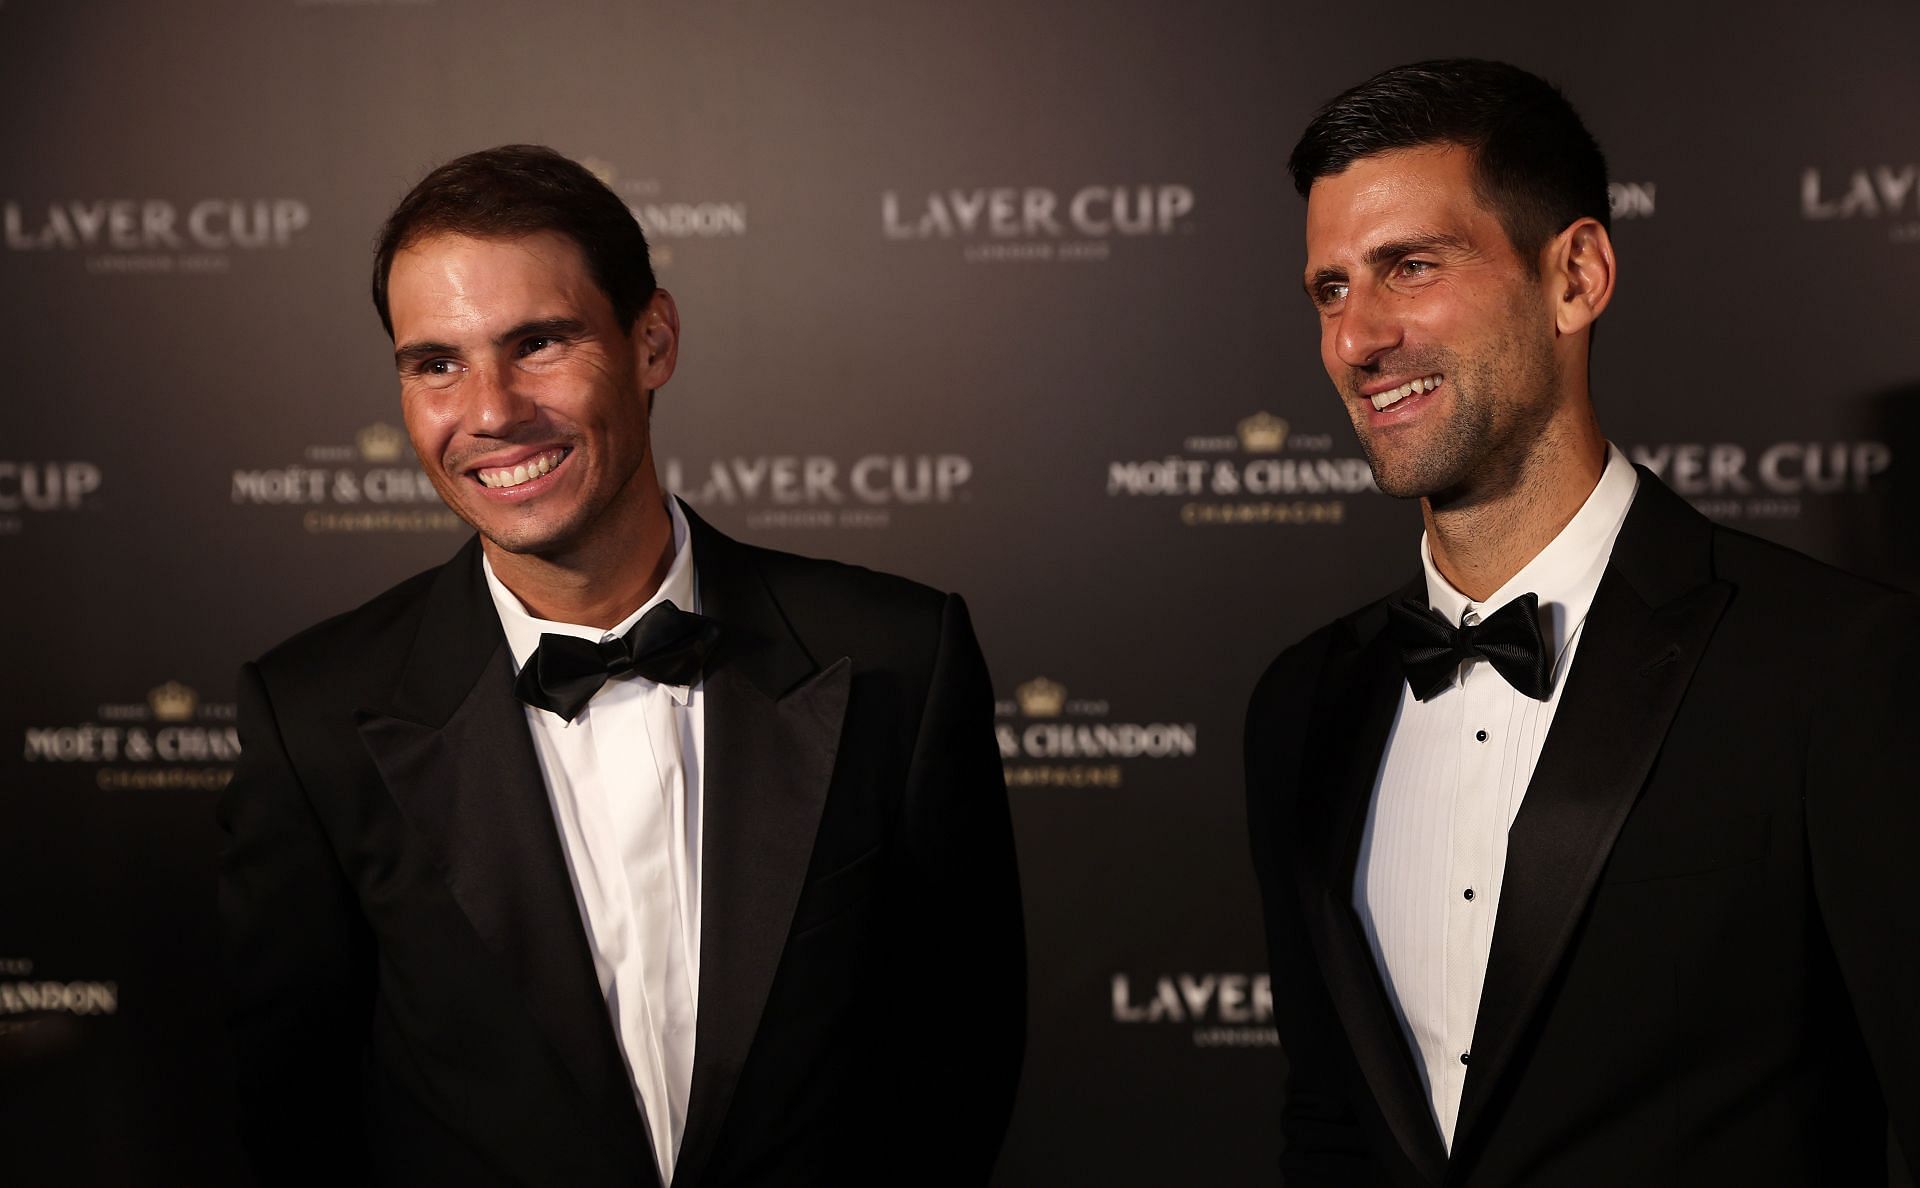 Rafael Nadal and Novak Djokovic at the 2022 Laver Cup in London.